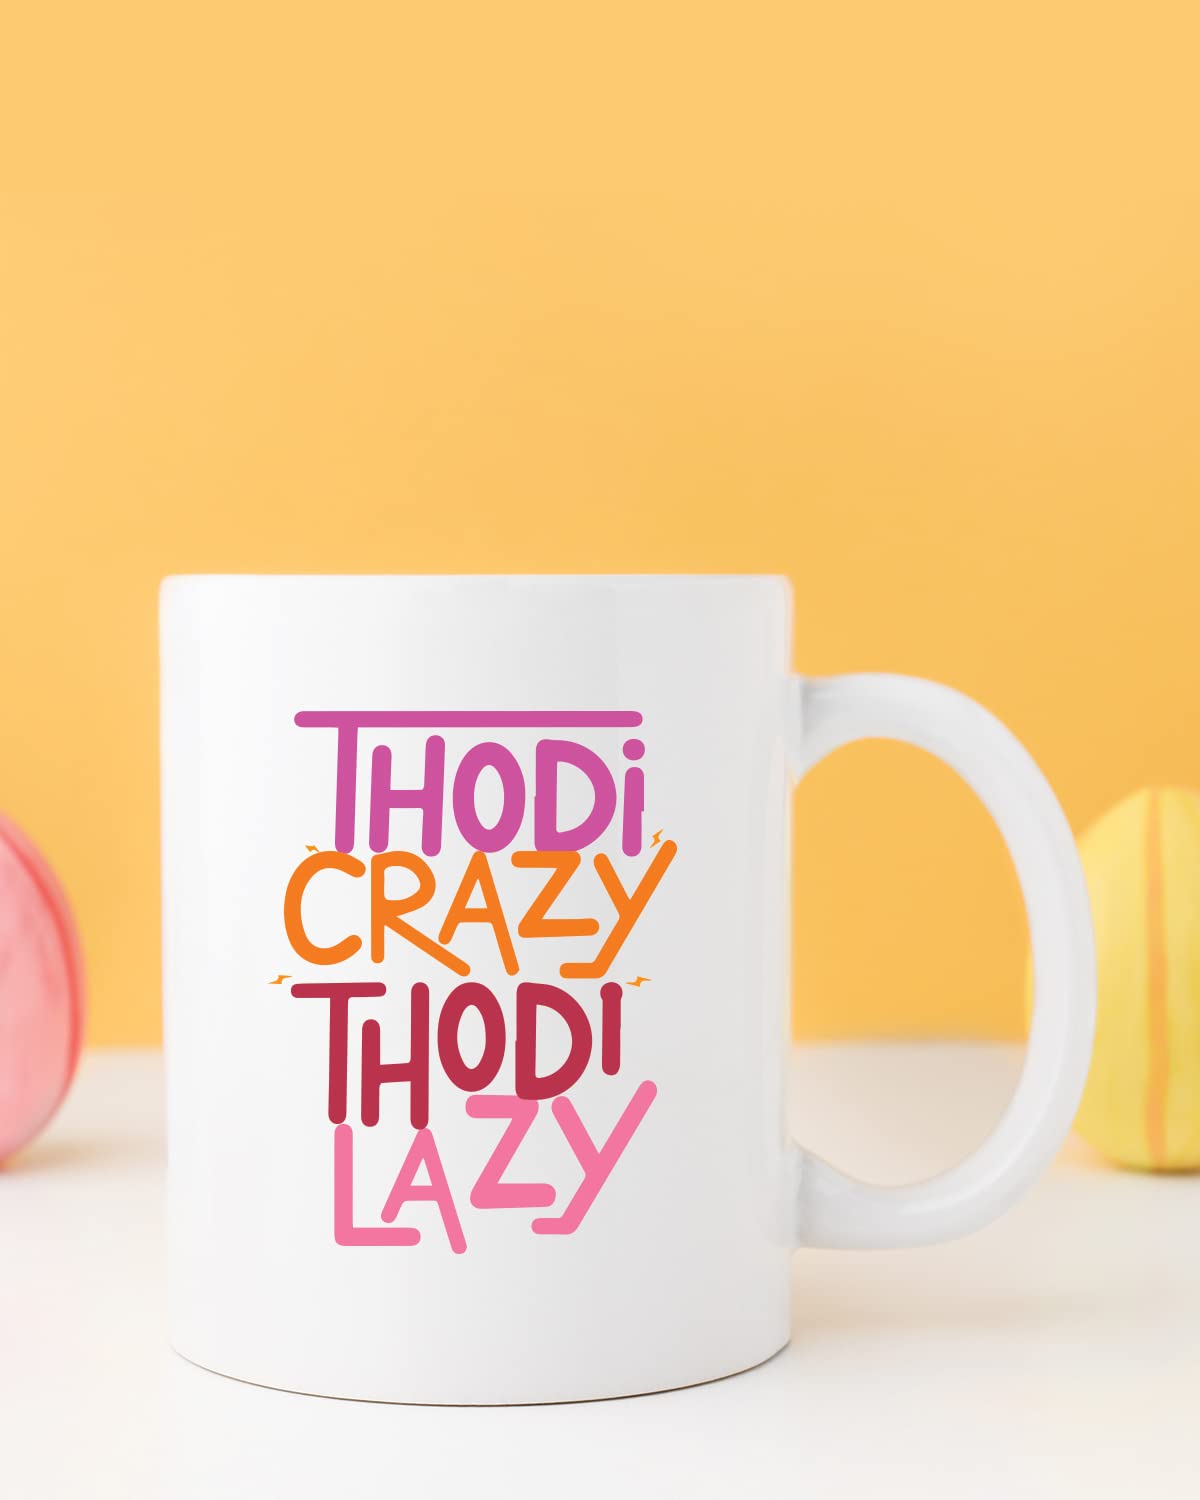 THODI Crazy THODI Lazy Coffee Mug - Gift for Friend, Birthday Gift, Birthday Mug, Motivational Quotes Mug, Mugs with Funny & Funky Dialogues, Bollywood Mugs, Funny Mugs for Him & Her